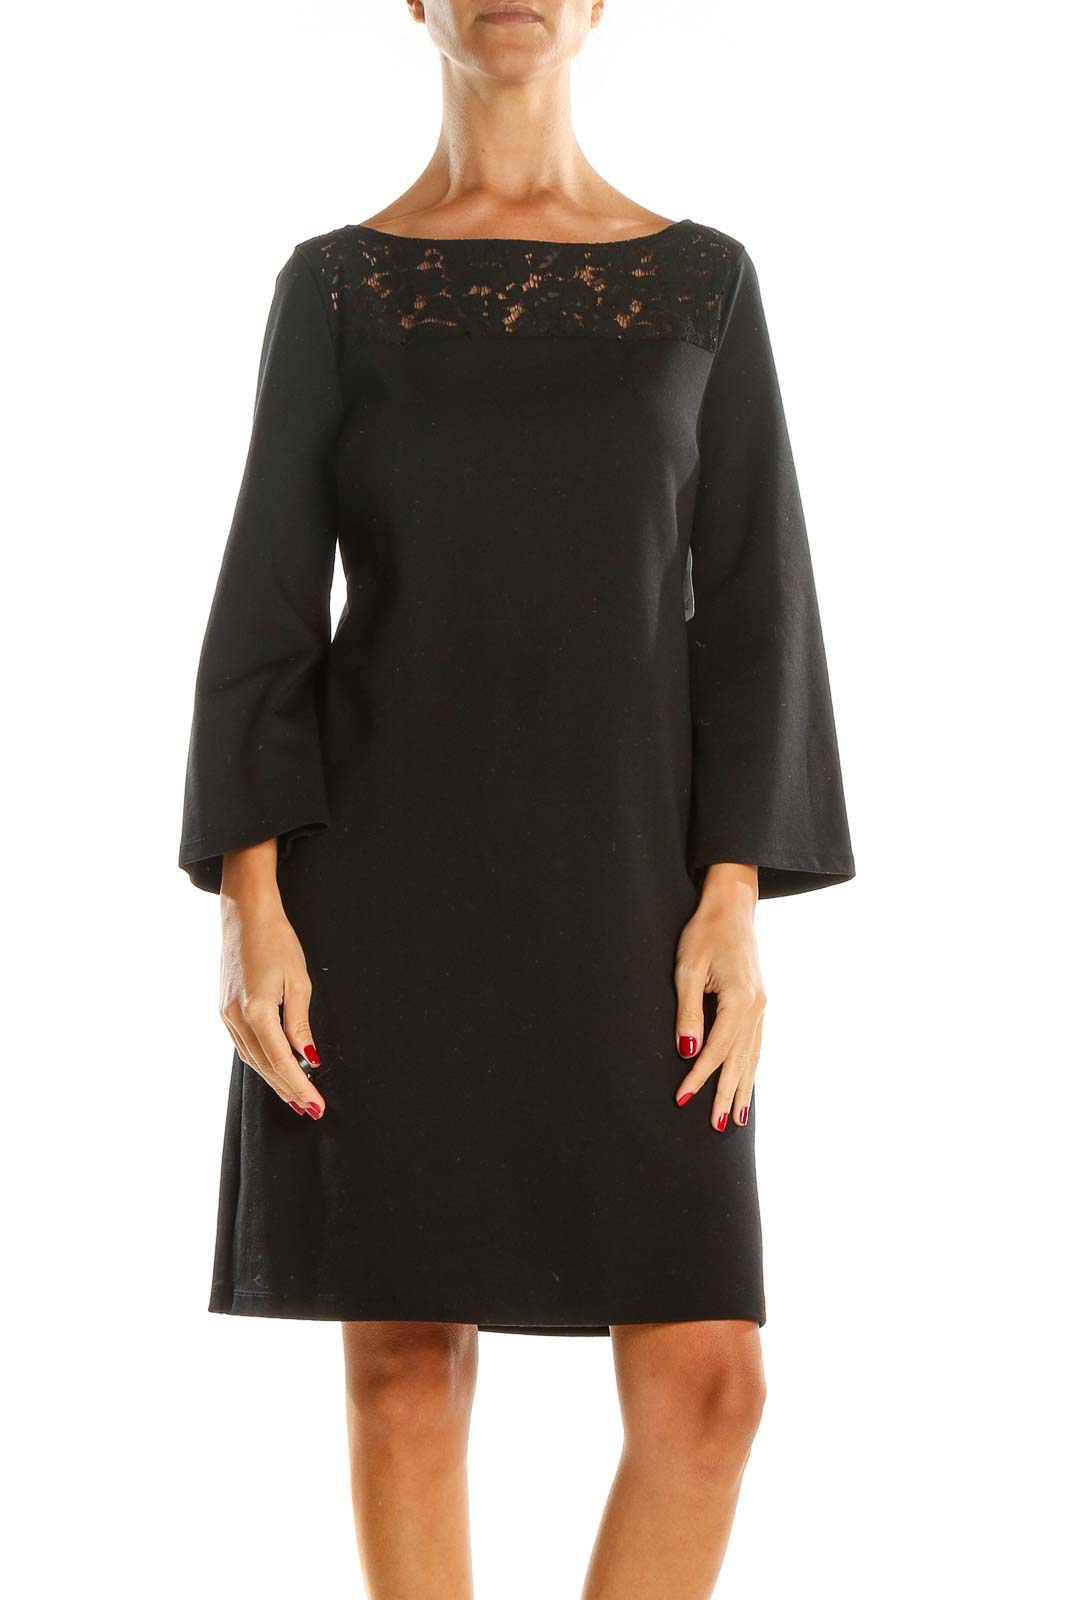 Black Classic A-Line Dress With Lace Neckline Front